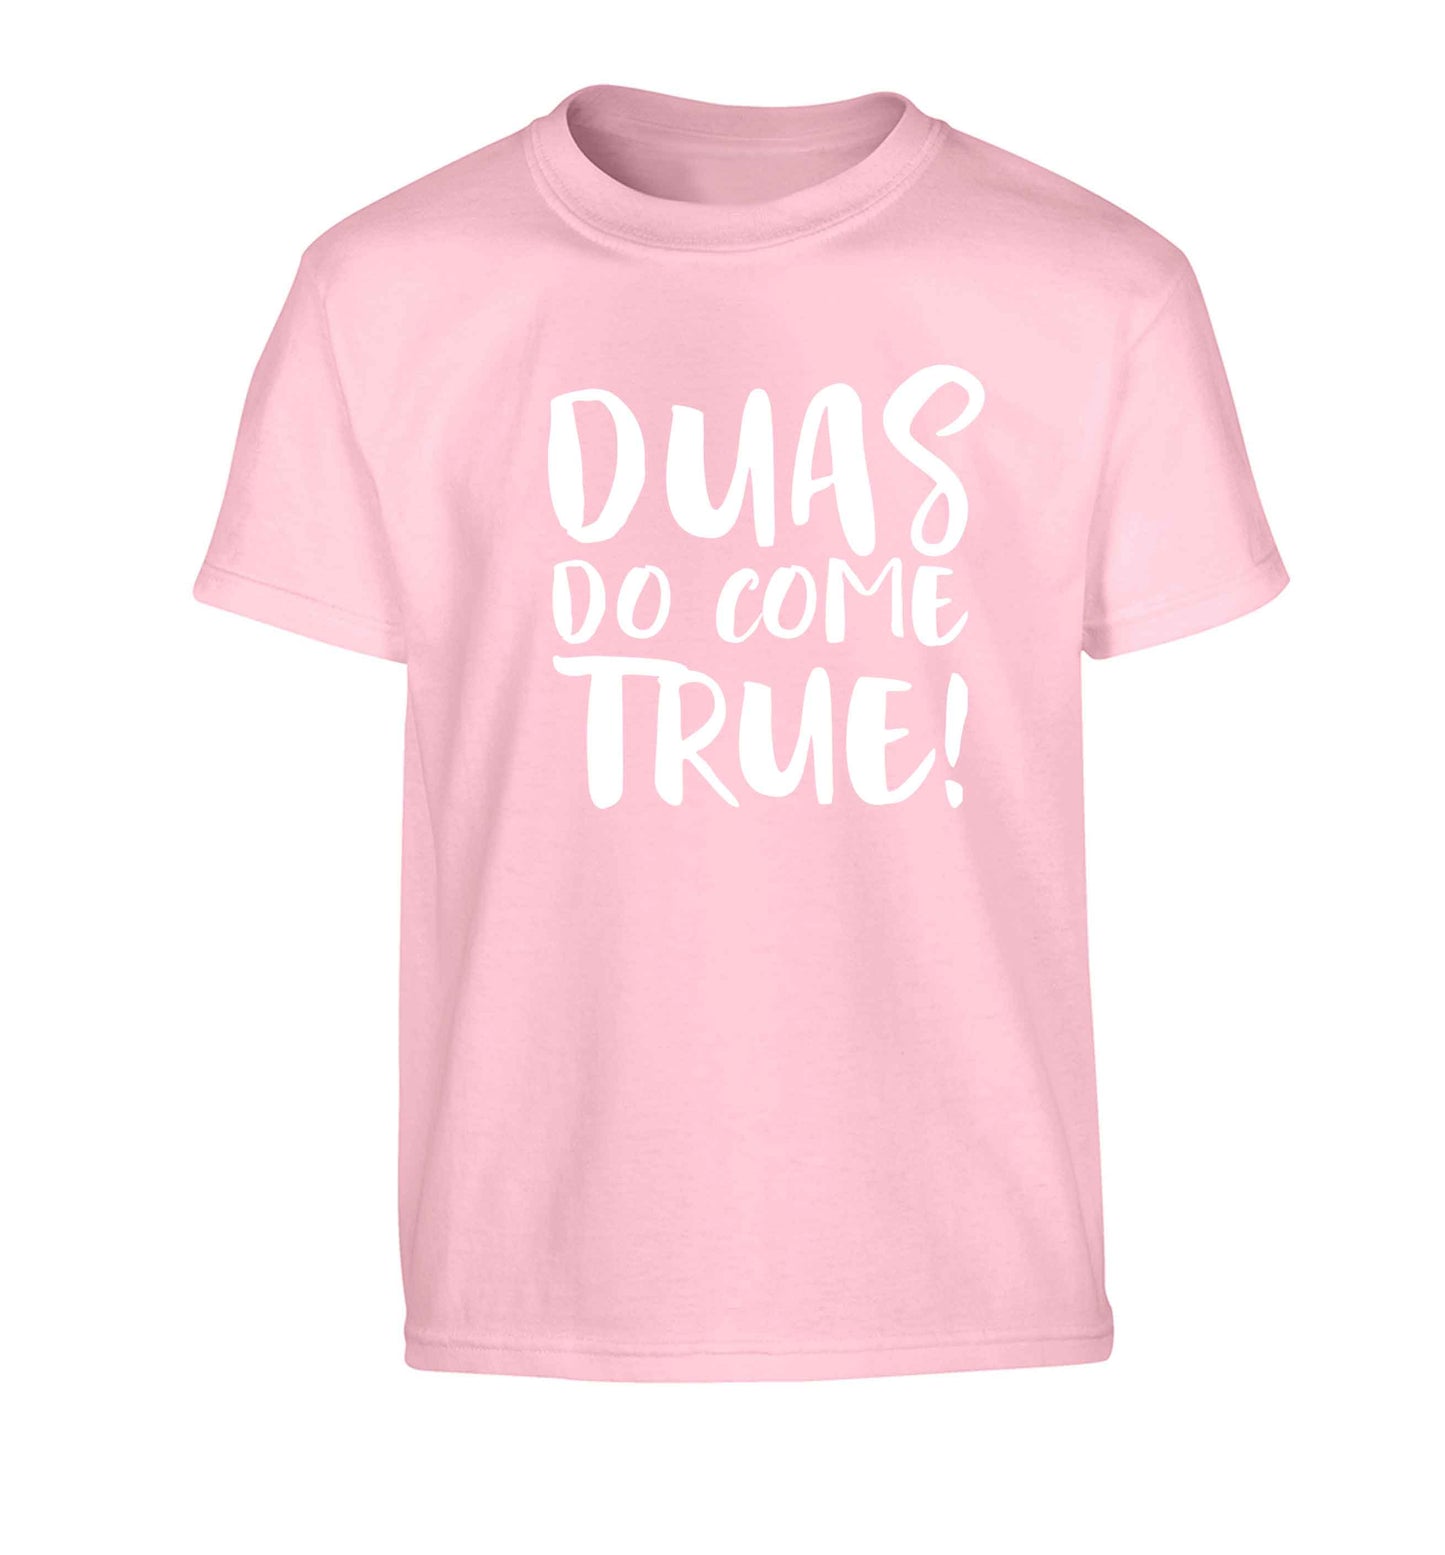 Duas do come true Children's light pink Tshirt 12-13 Years